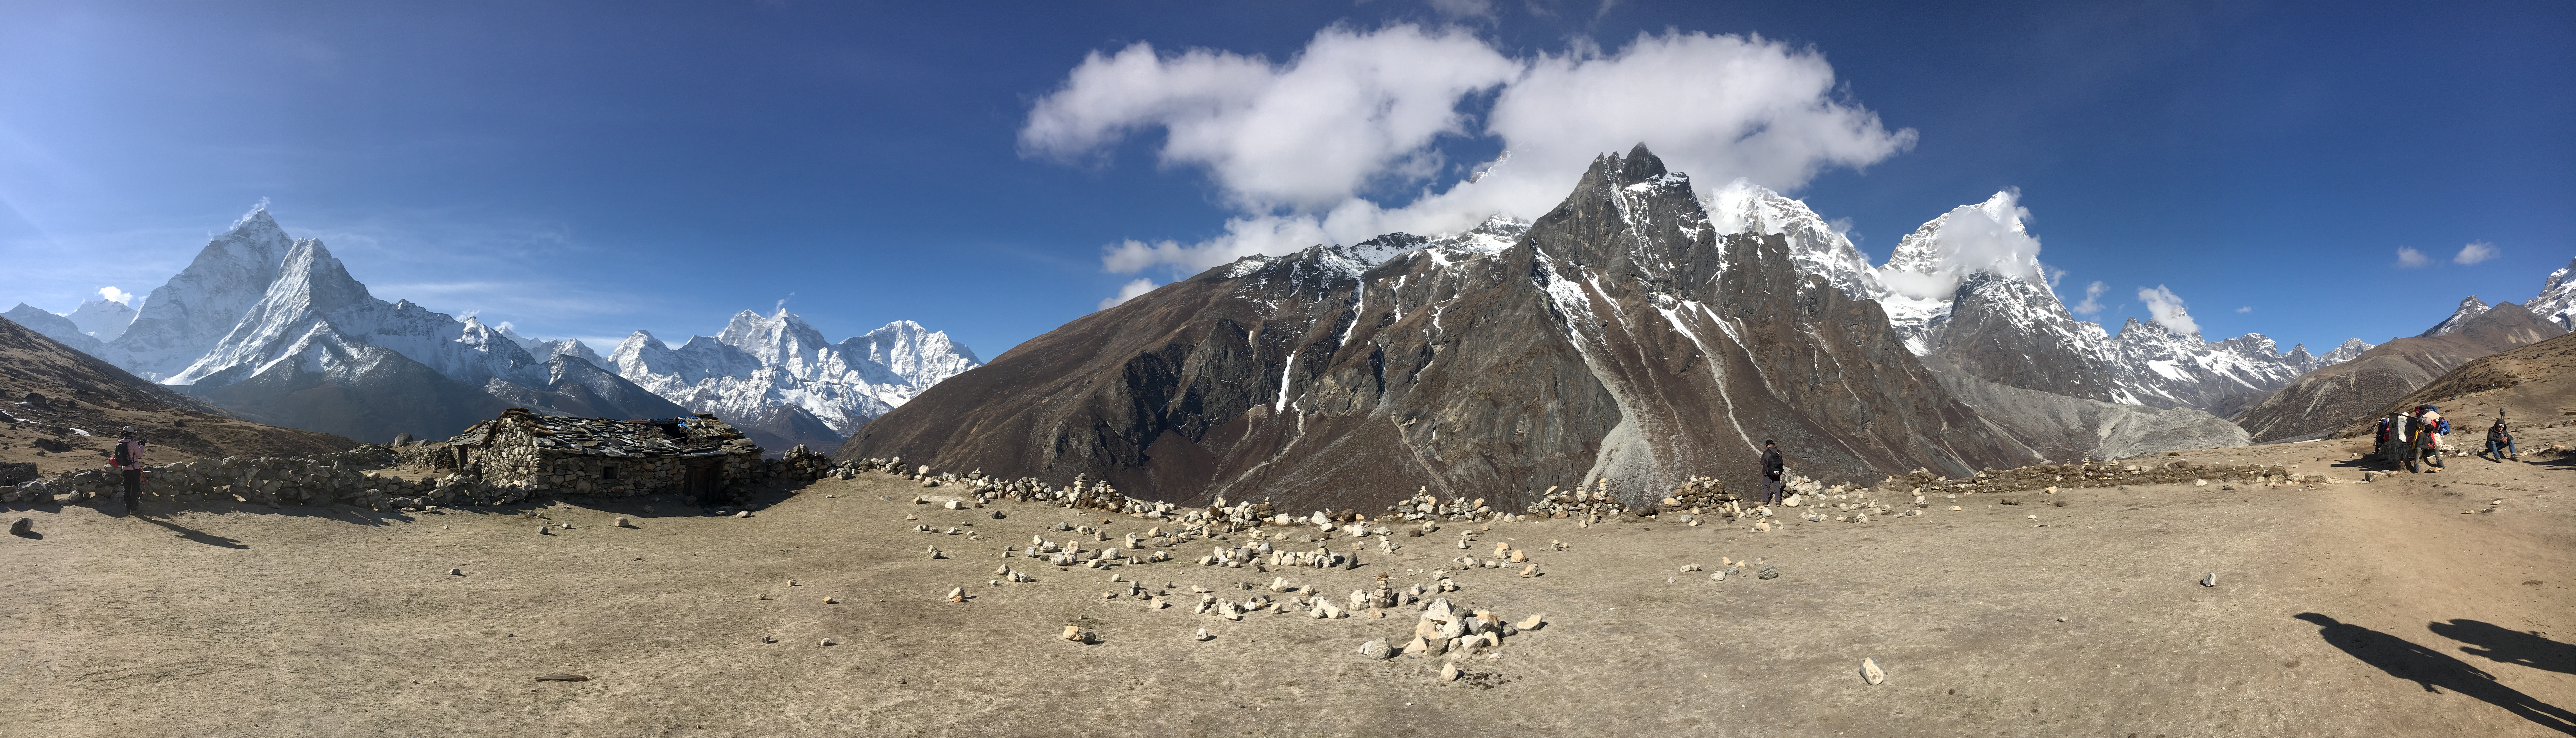 Trekking Himalaya Nepal